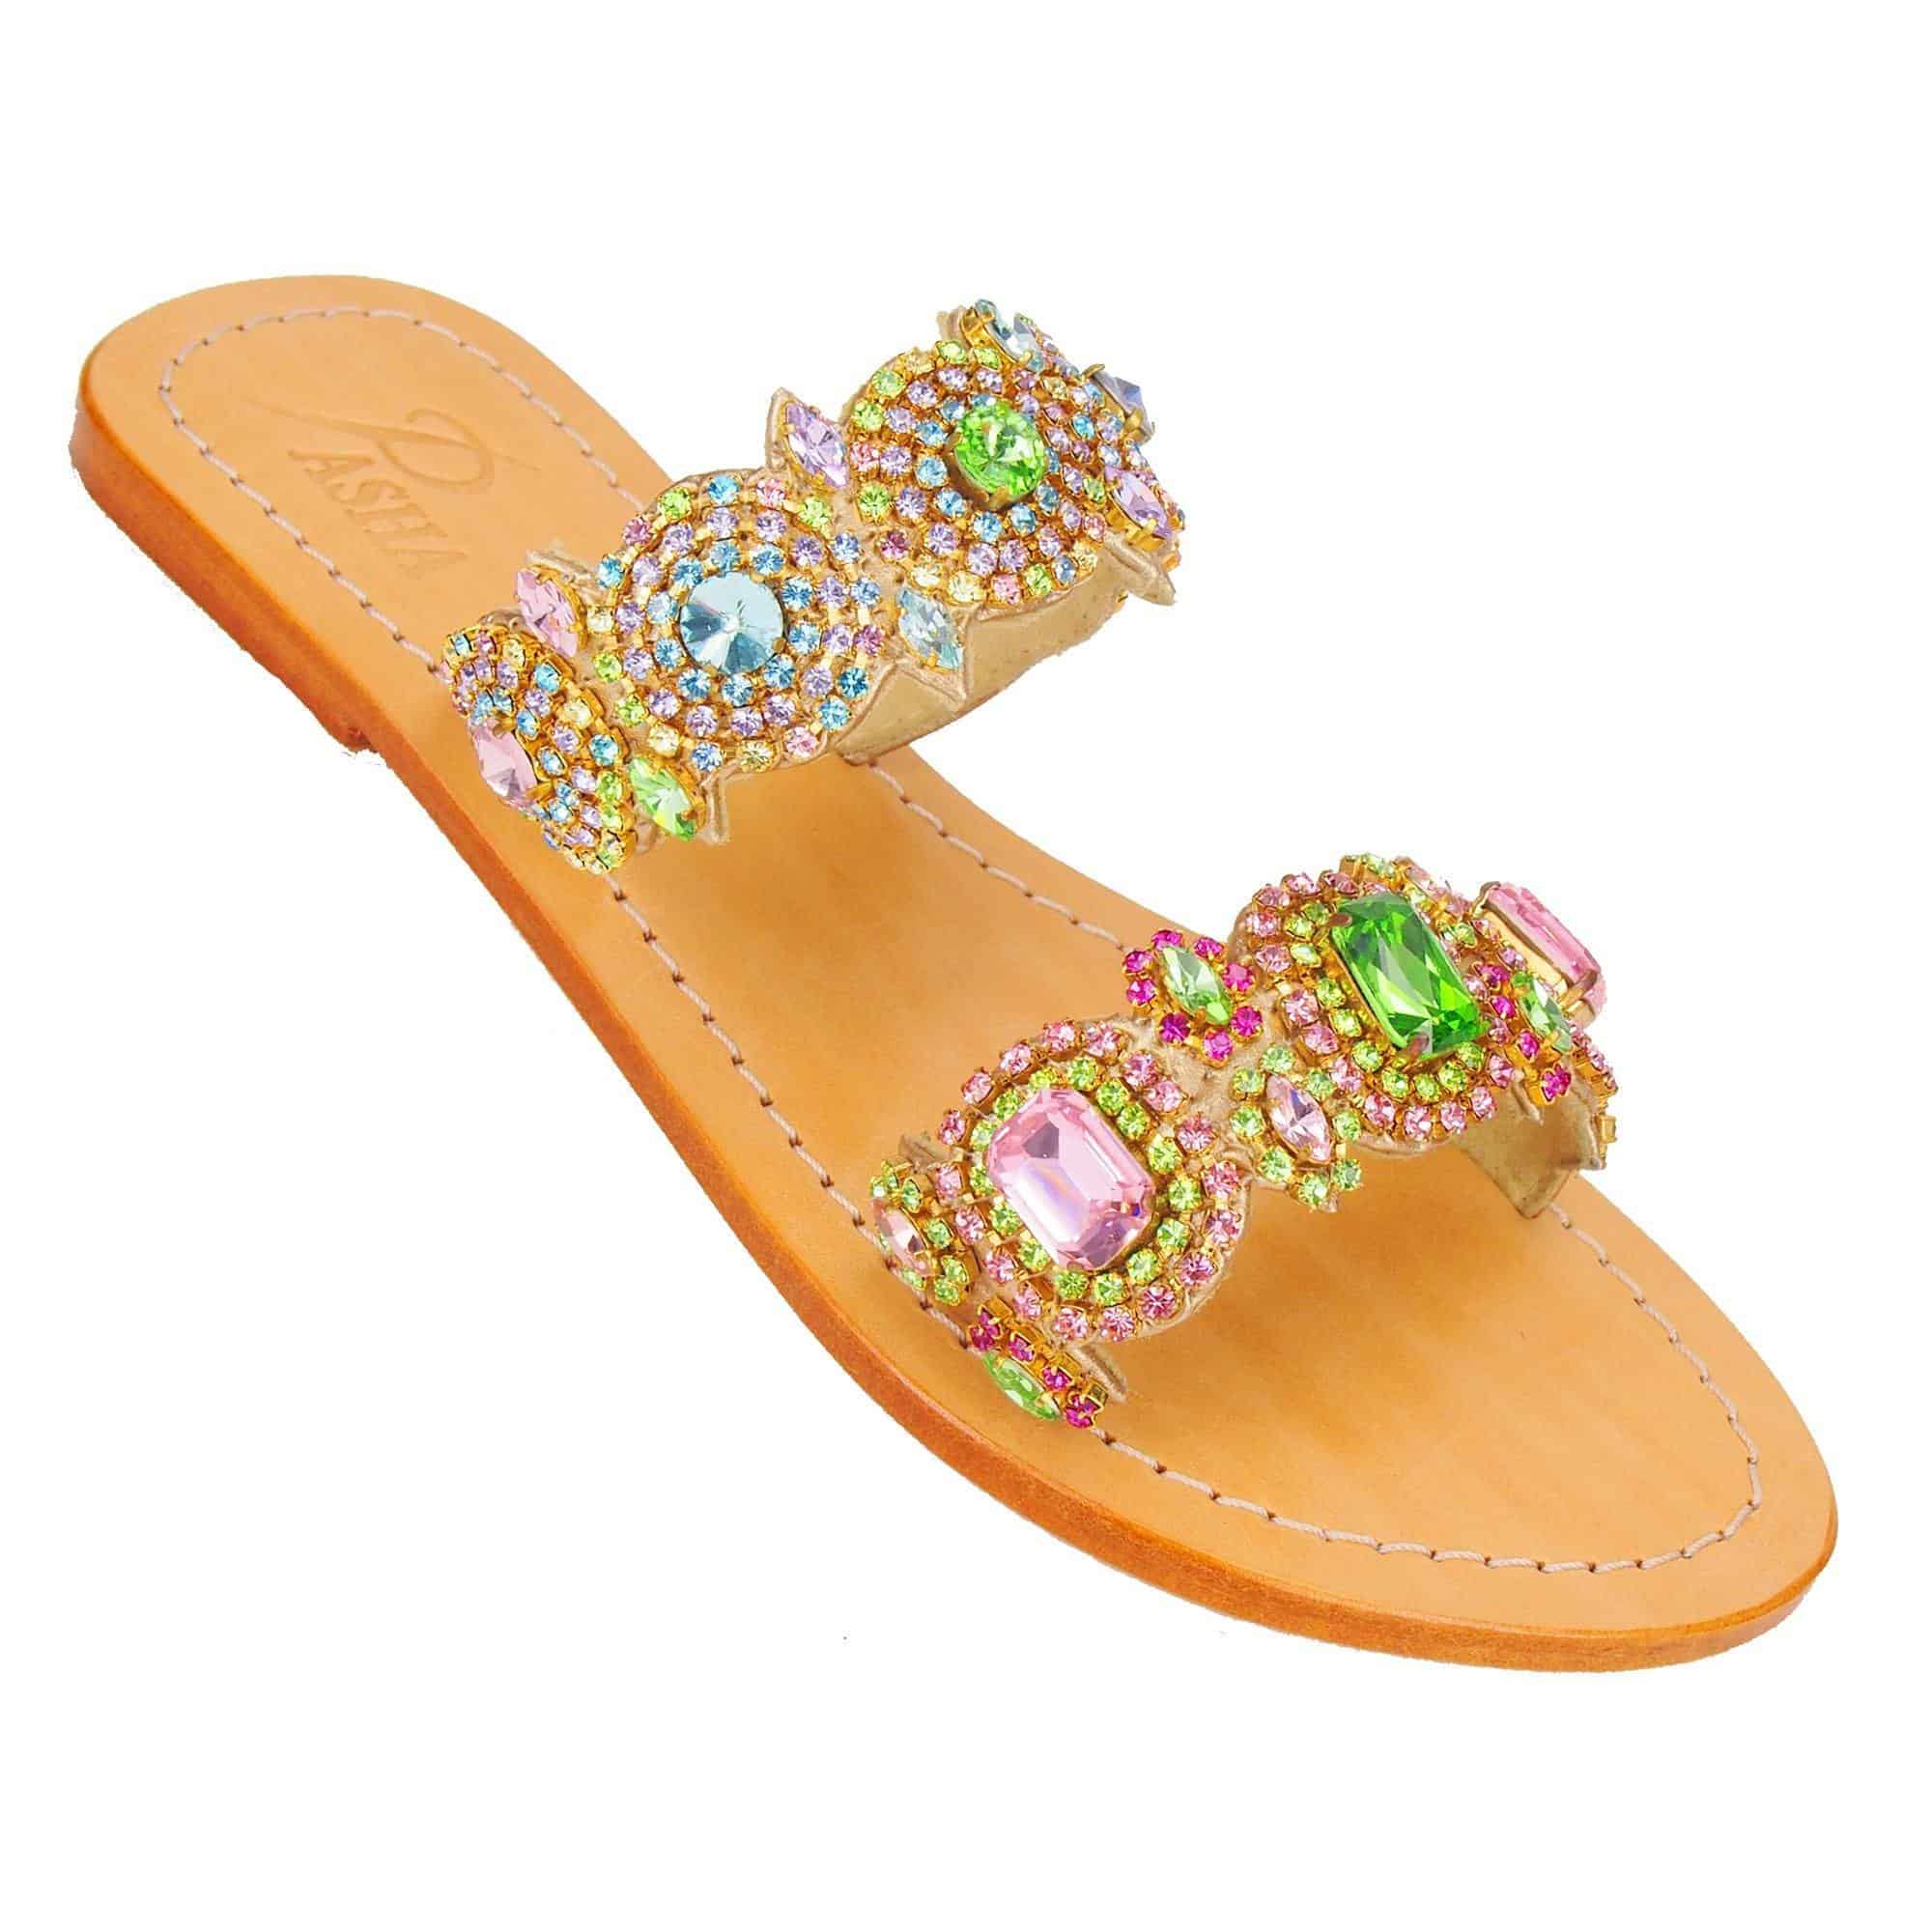 NAGU - Pasha Sandals - Jewelry for your feet - 